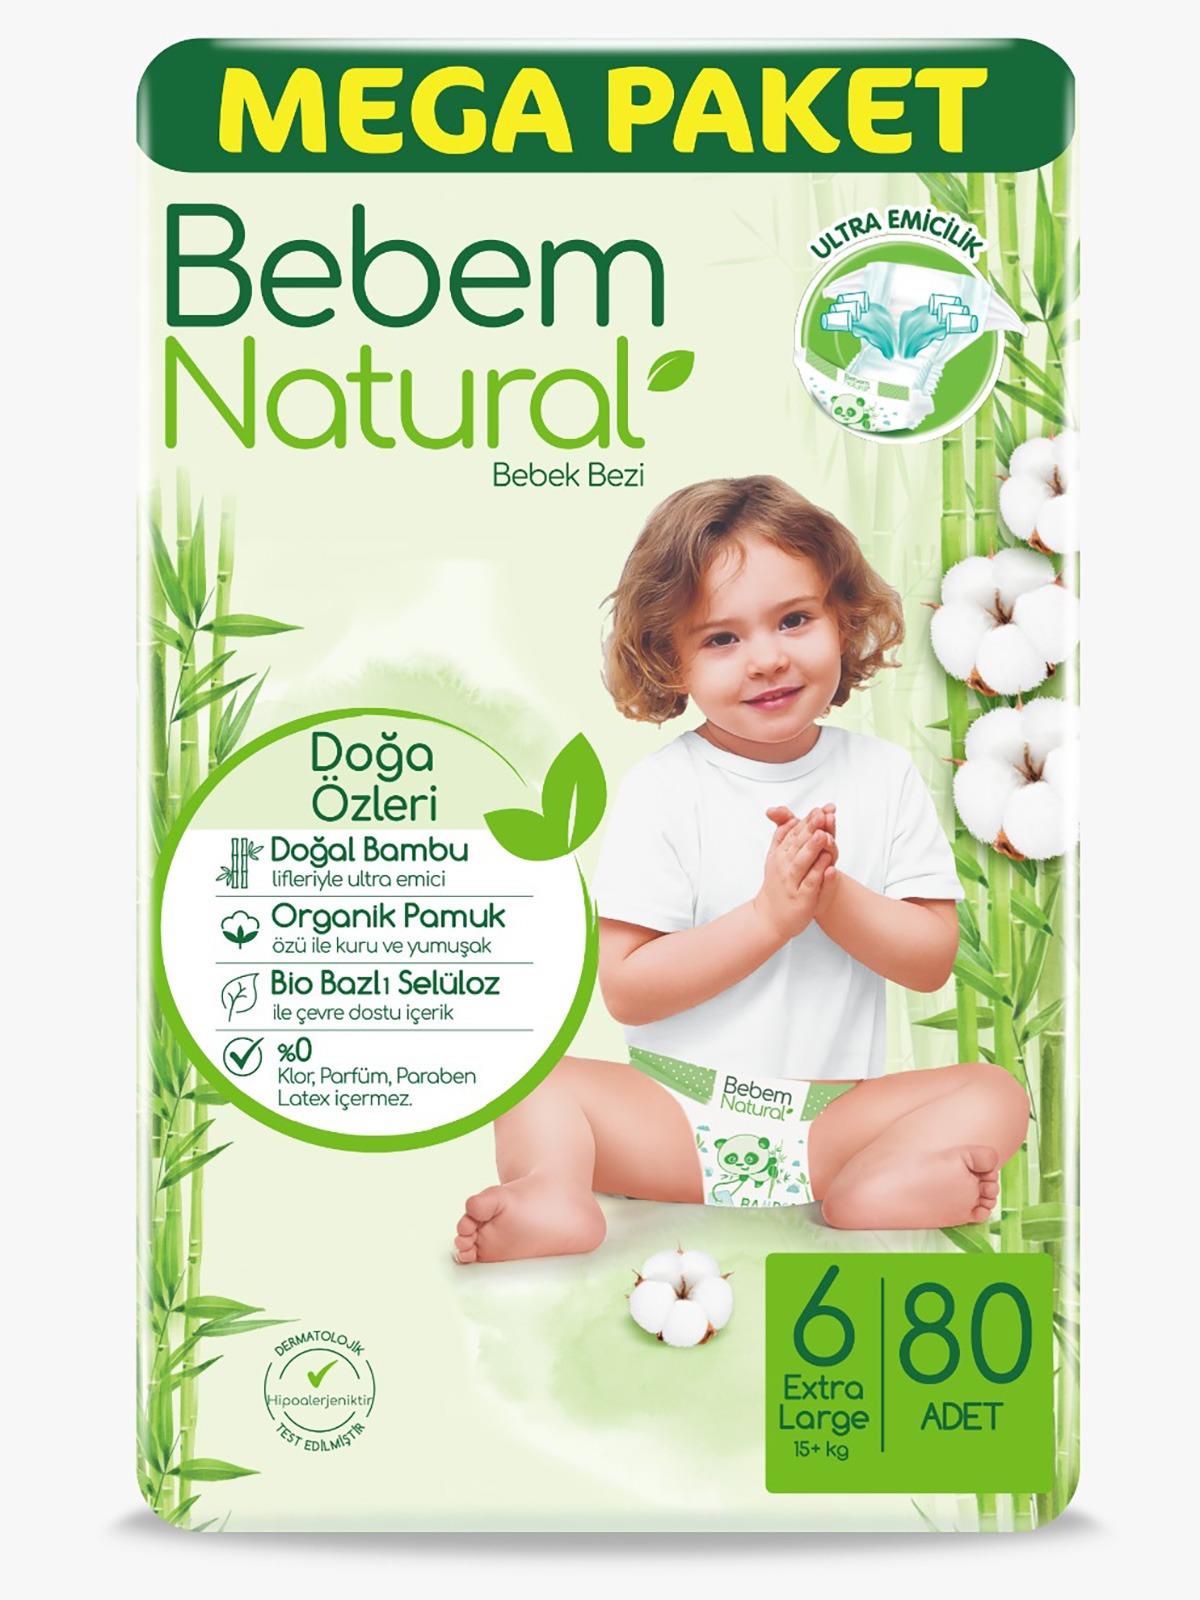 Bebem Natural Bebek Bezi Fırsat Paketi 6 Beden Ekstra Large 80 Adet Mega Paket